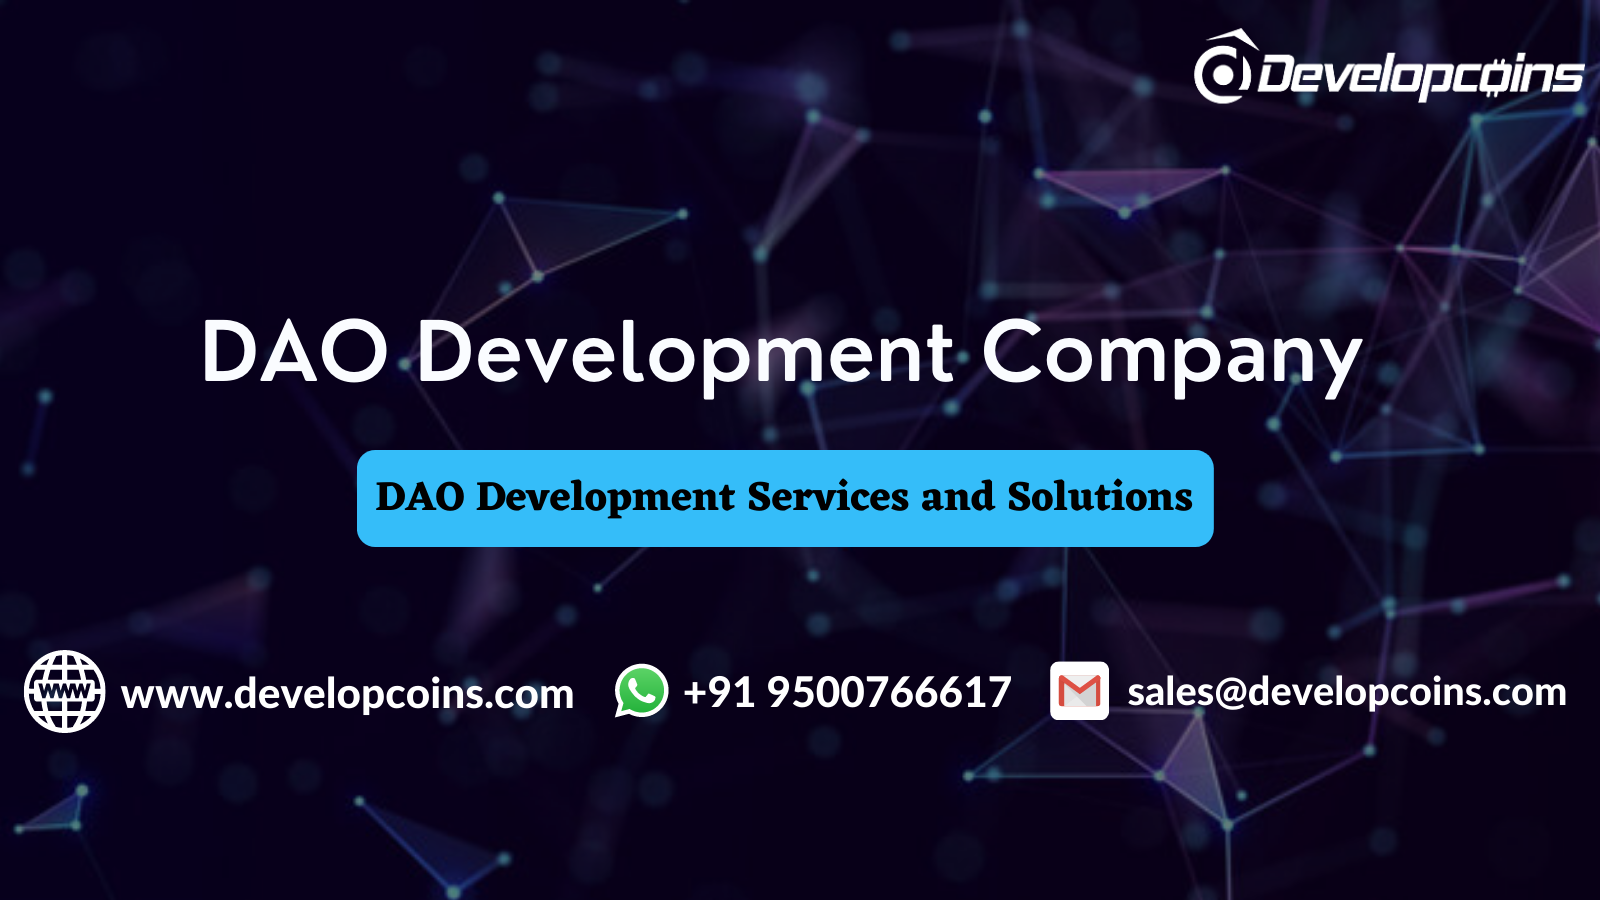 DAO(Decentralized Autonomous Organization) Development Company - Developcoins